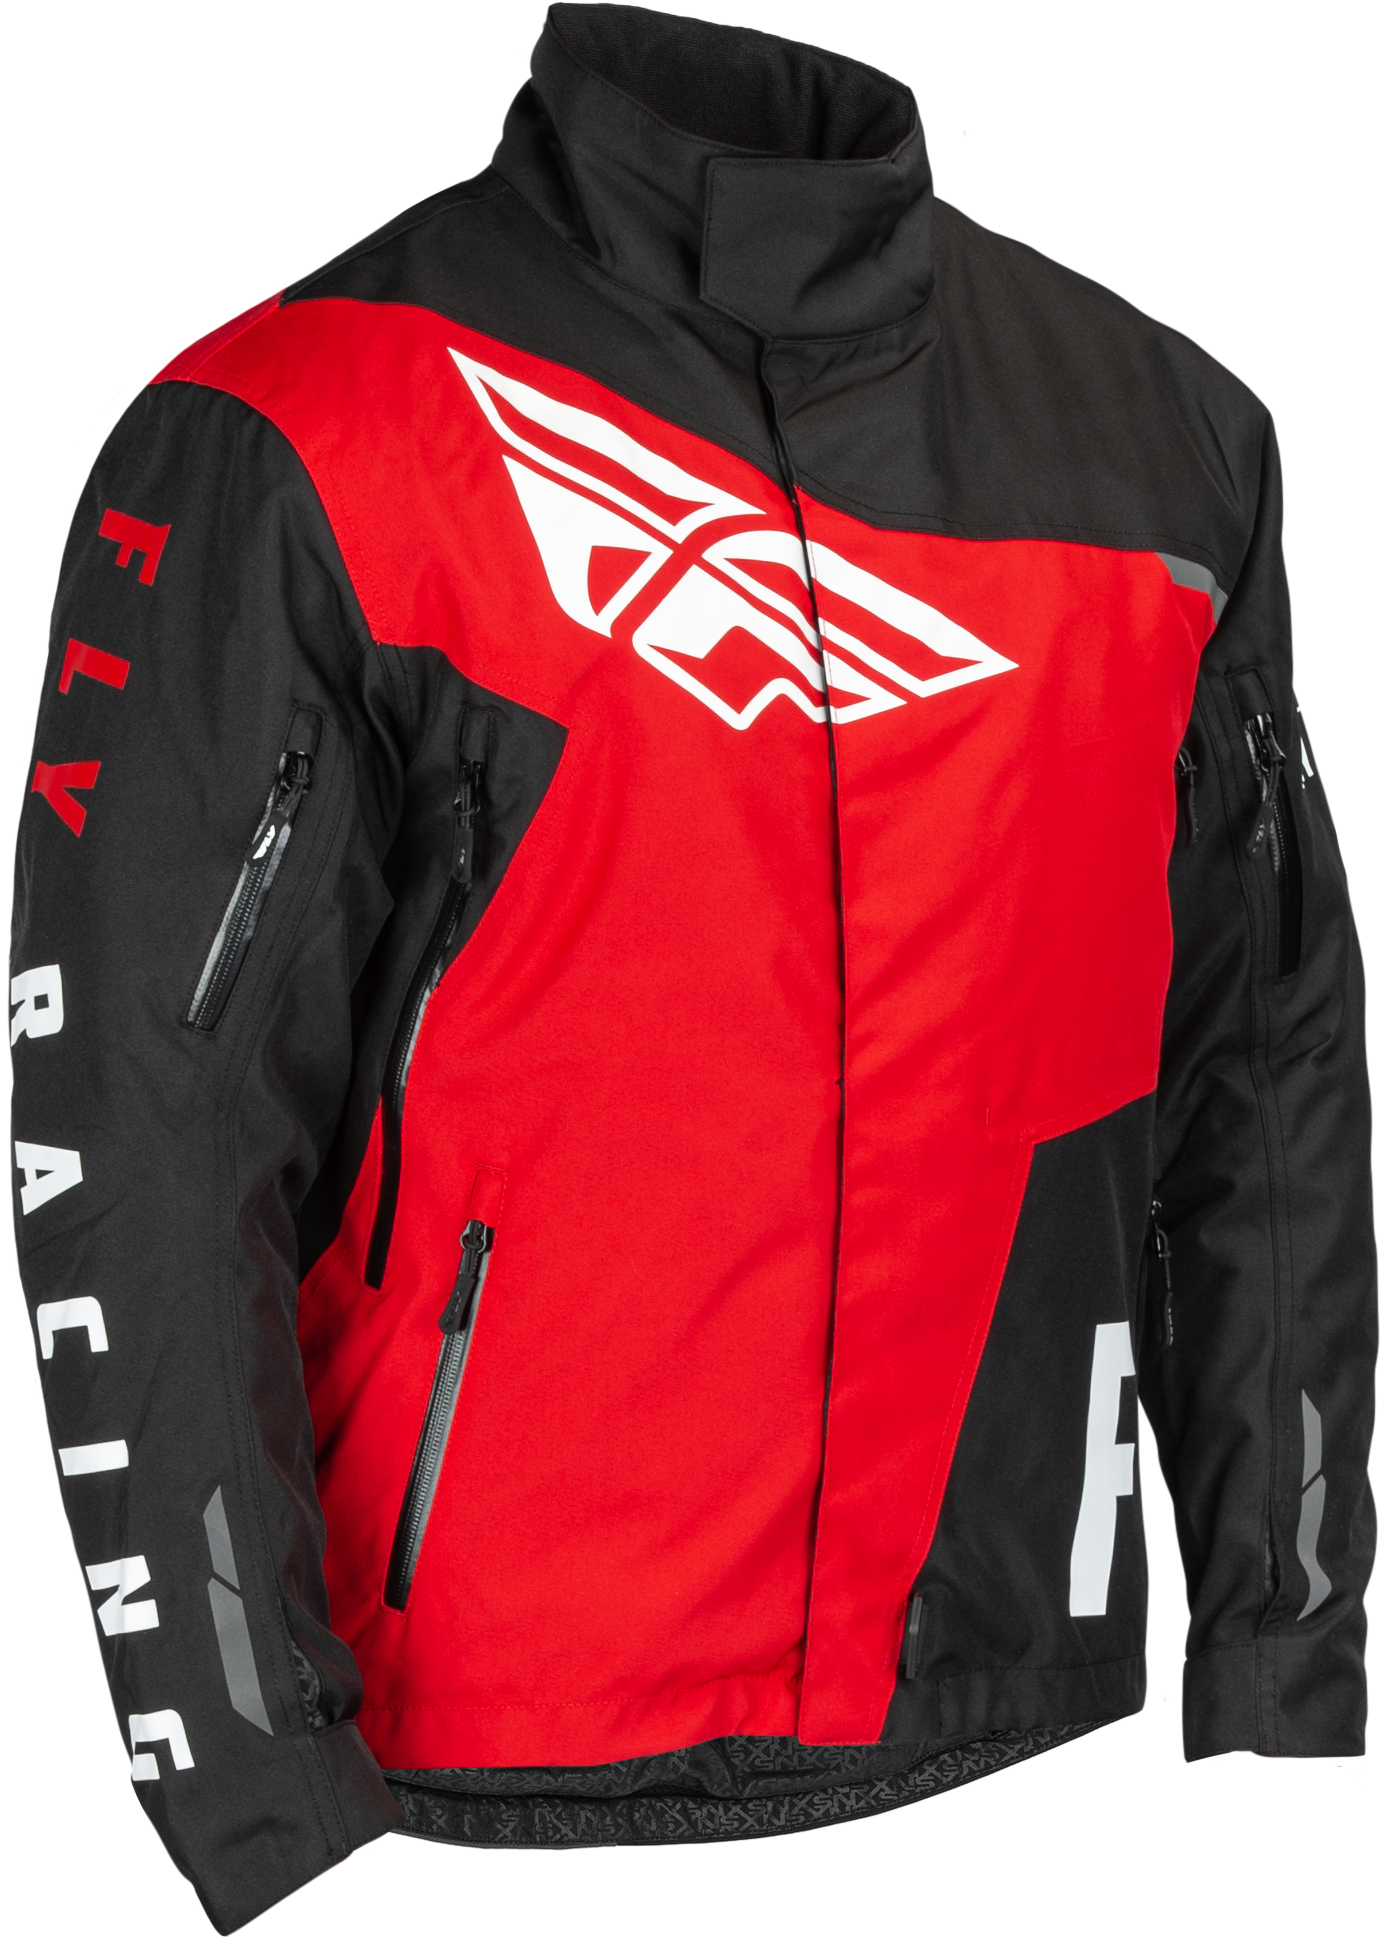 FLY RACING Snx Pro Jacket Black/Red 4x 470-54024X